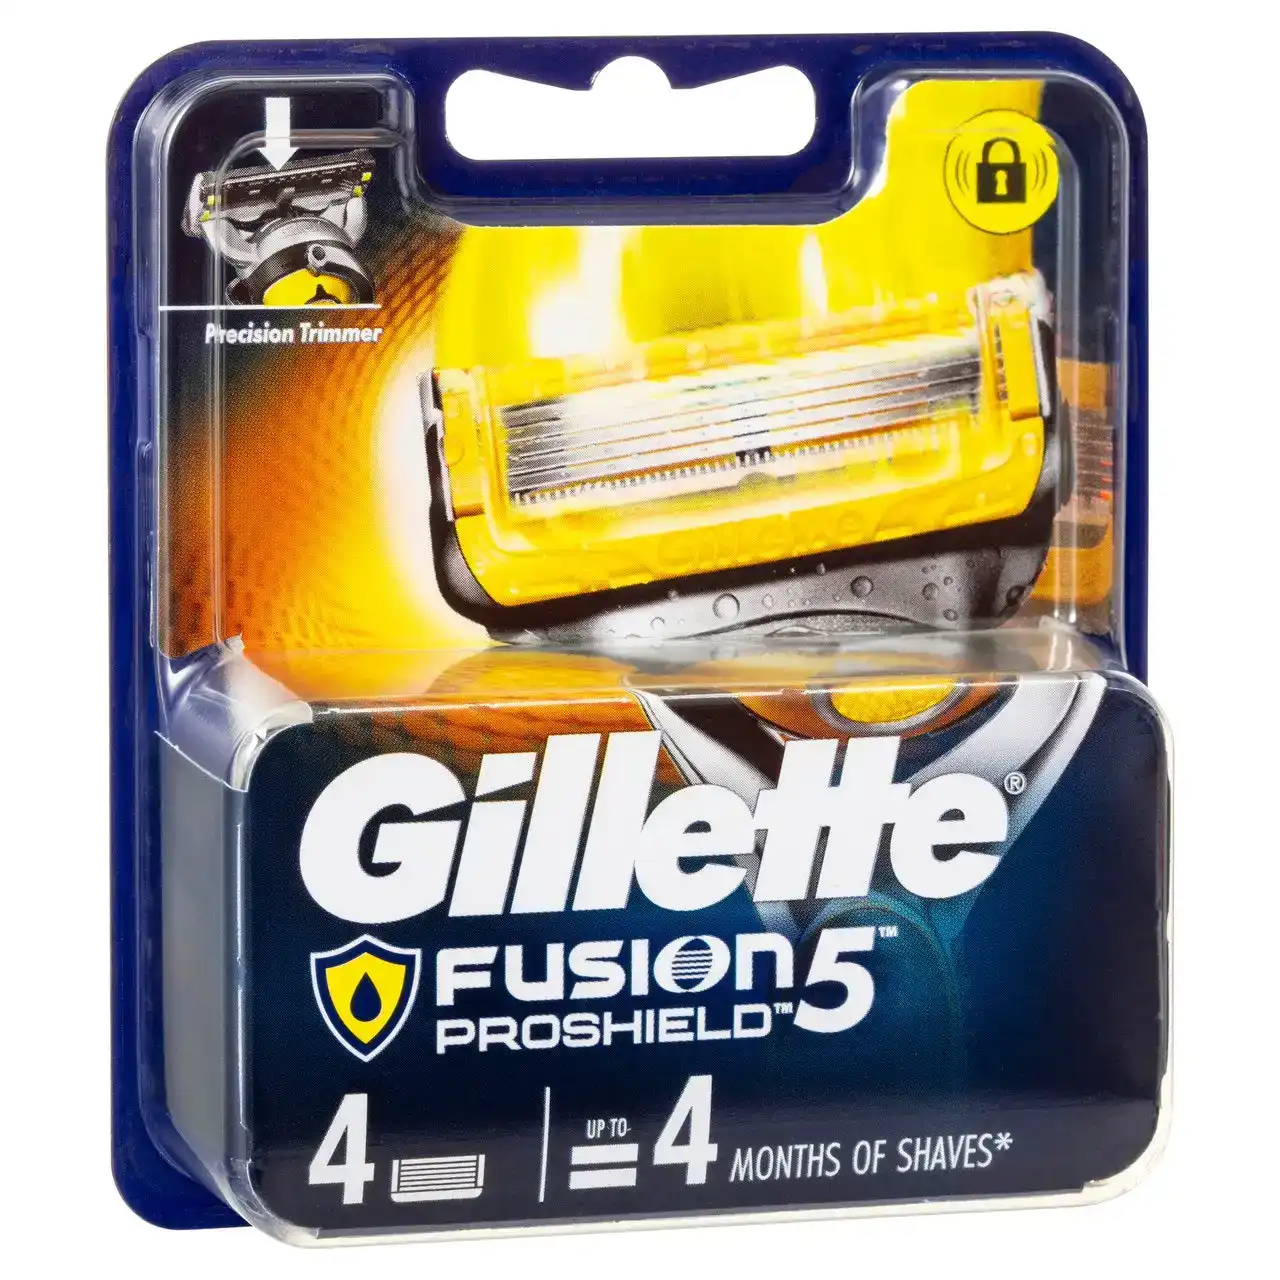 Gillette Fusion5 Proshield Cartridges 4 Pack